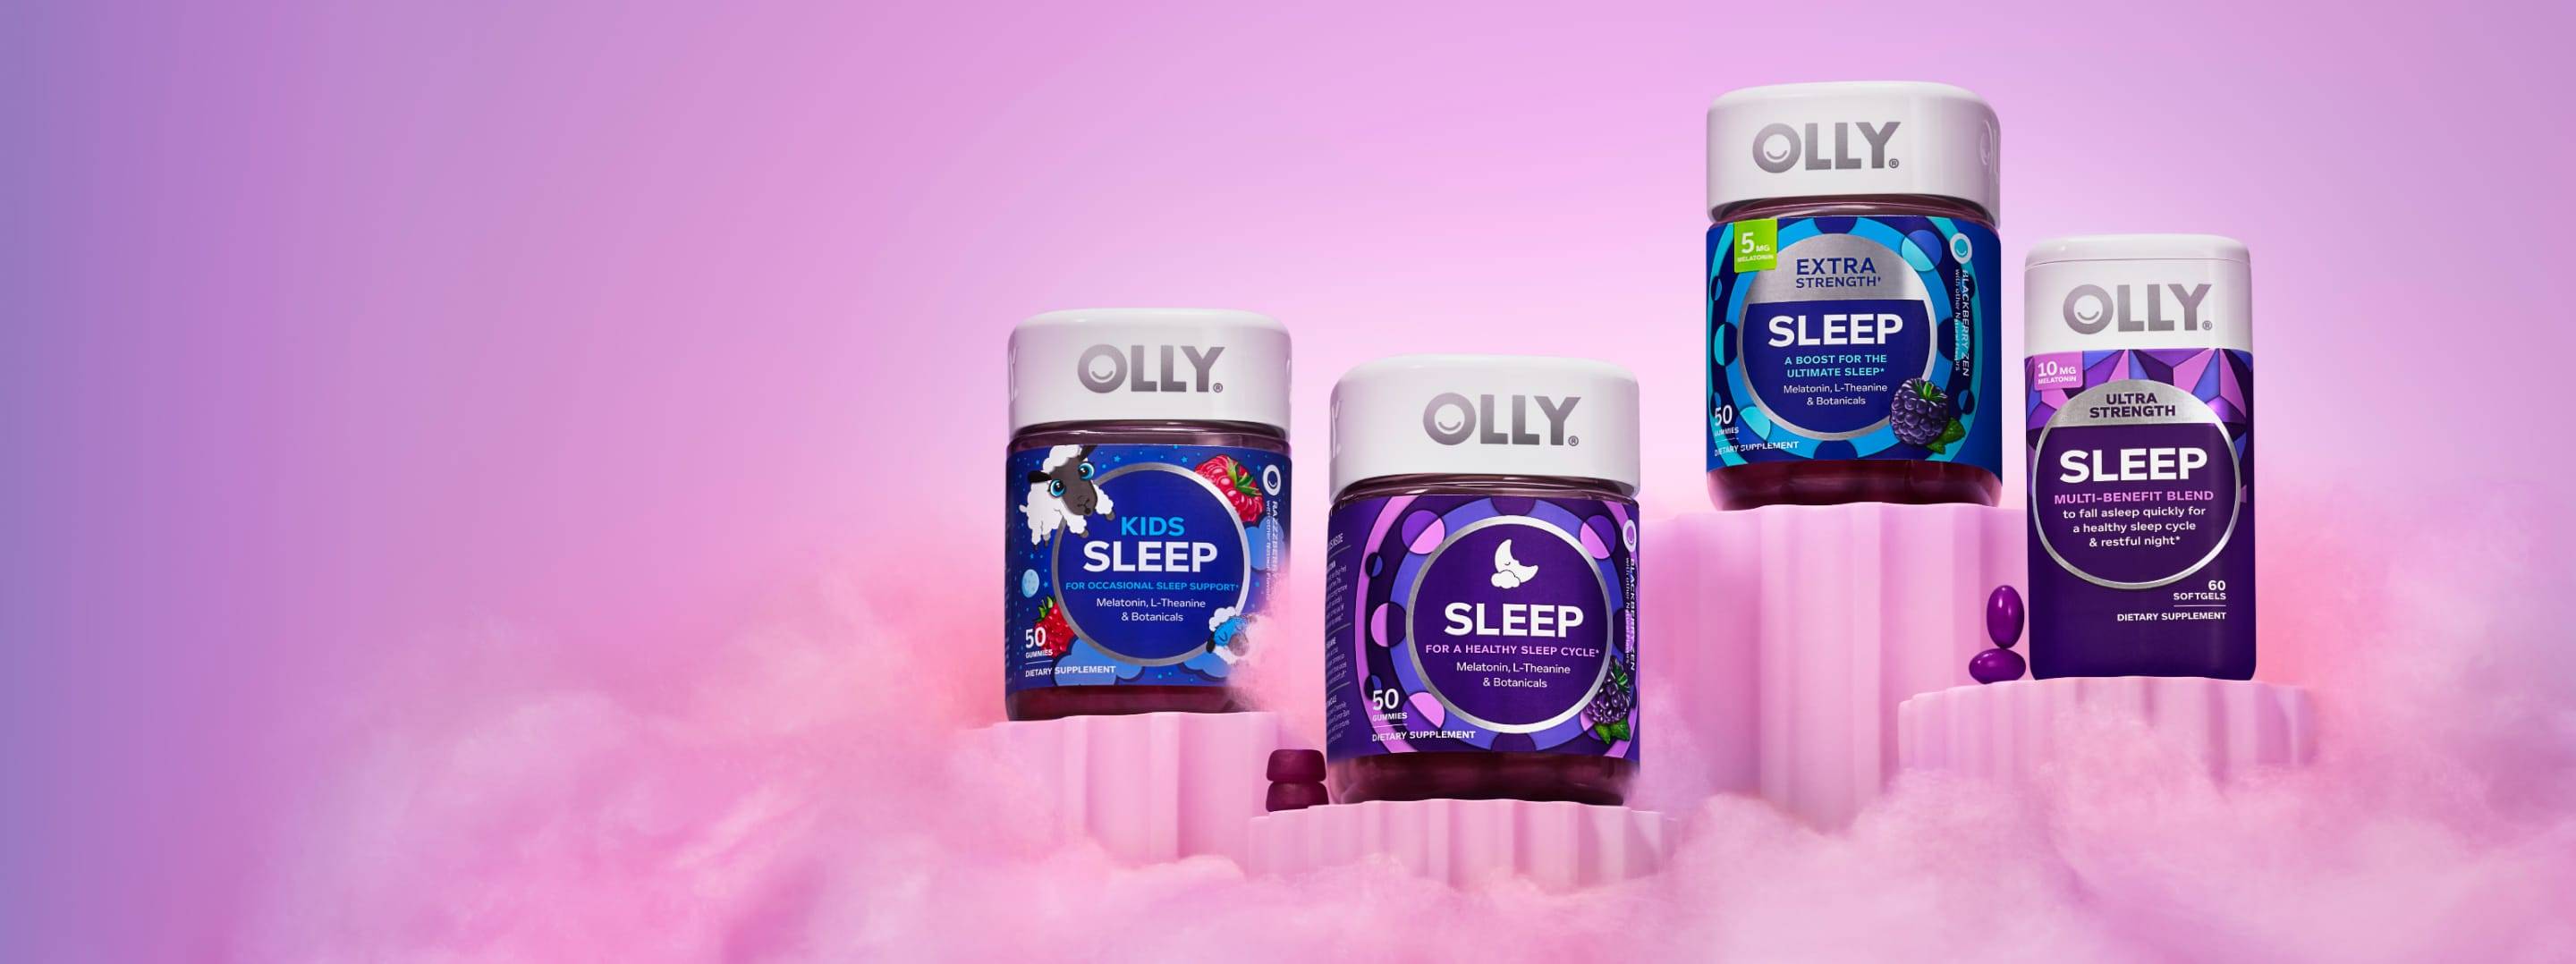 OLLY Sleep Products